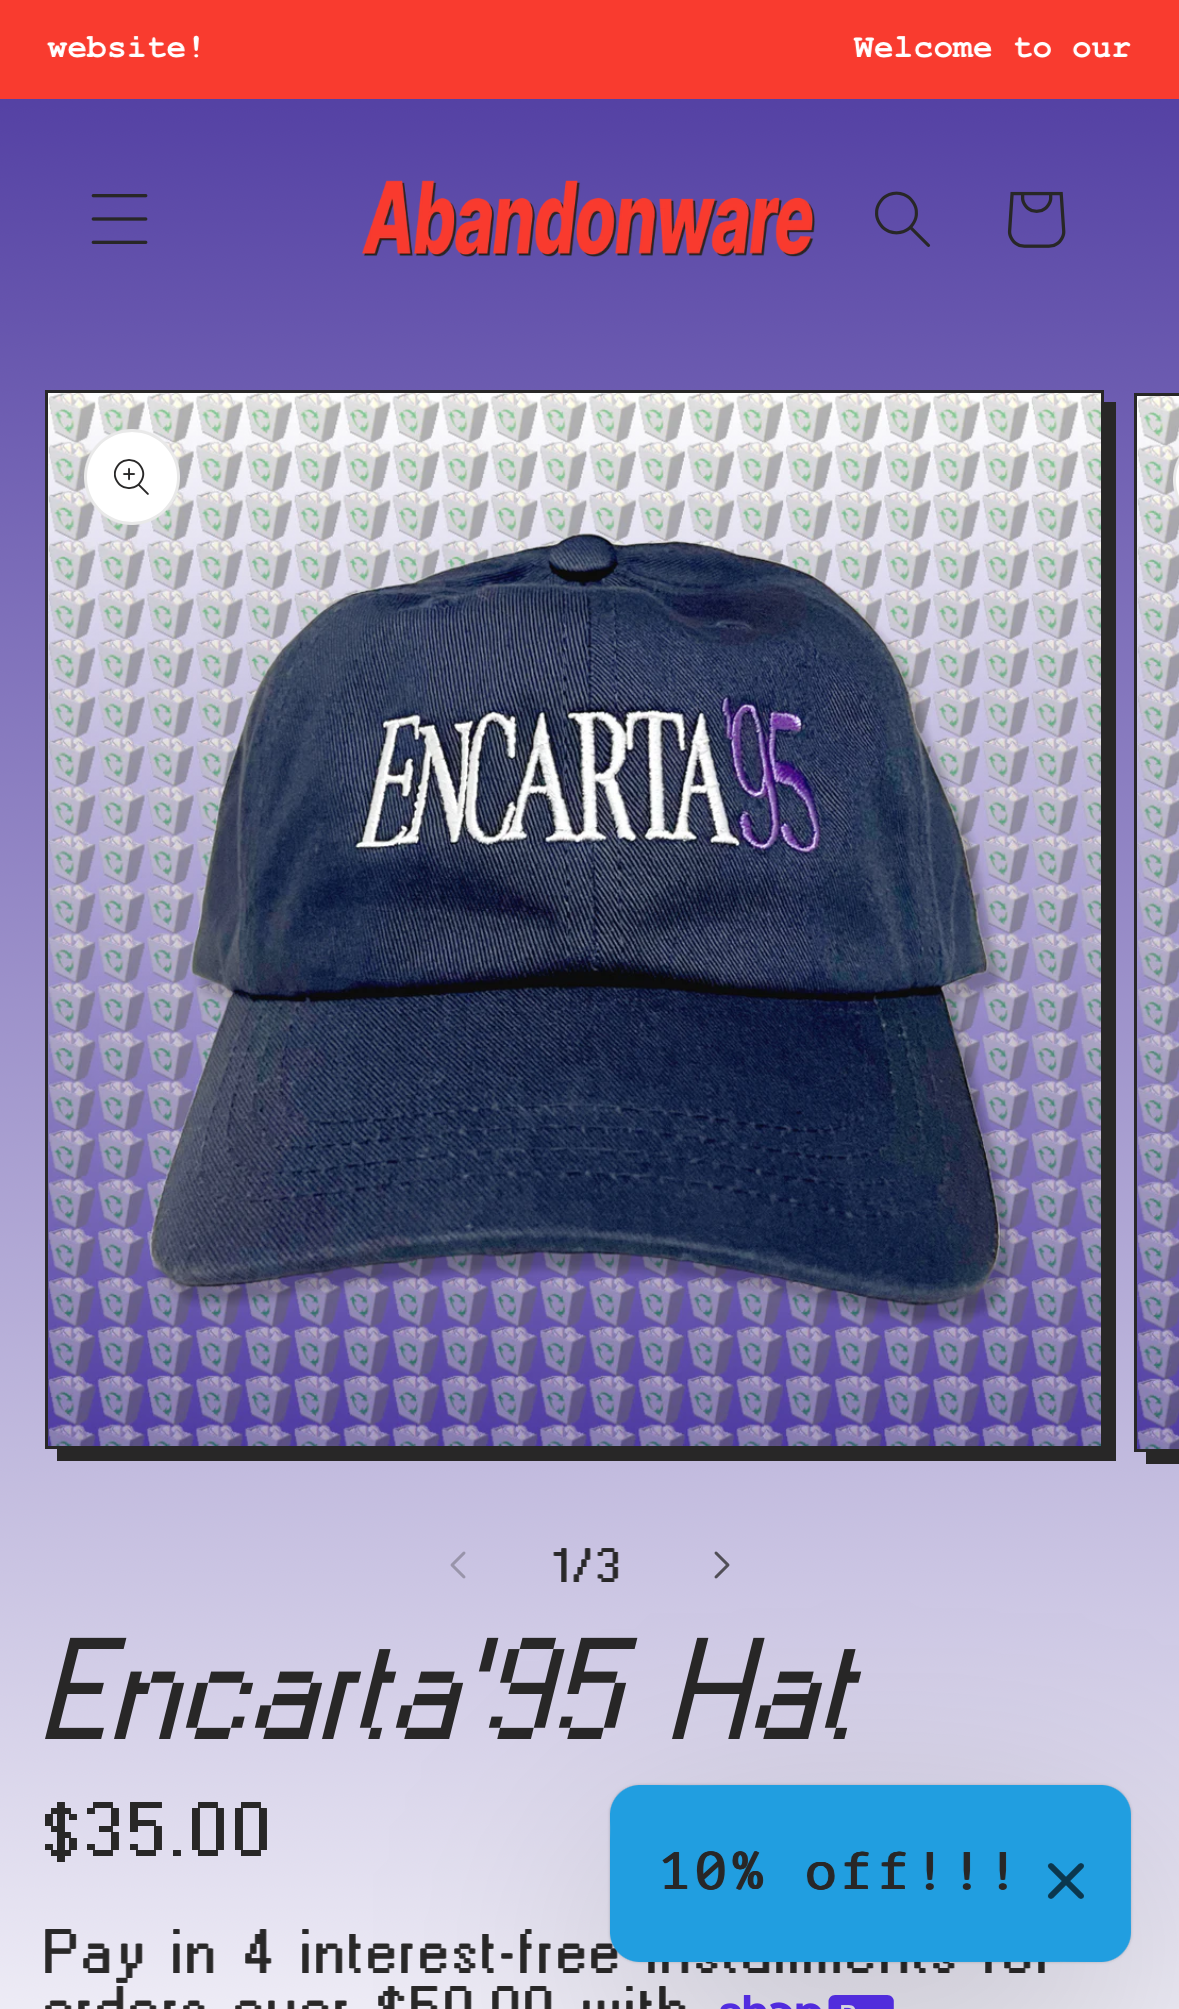 Encarta 95 Hat